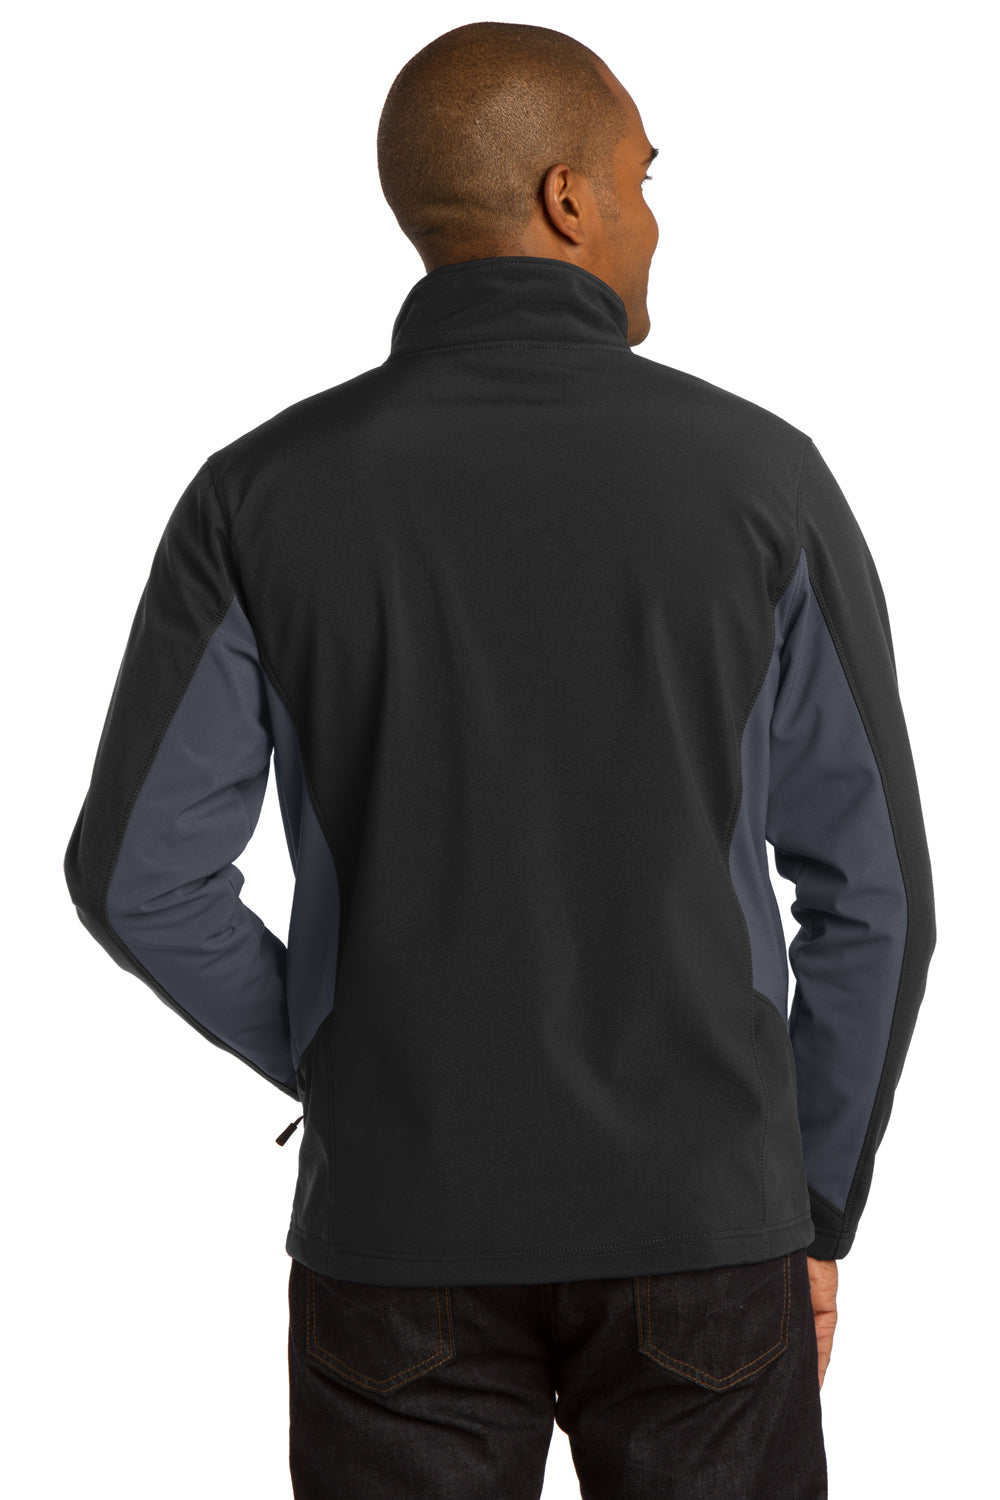 Port Authority J318 Mens Core Wind & Water Resistant Full Zip Jacket Black/Grey Back